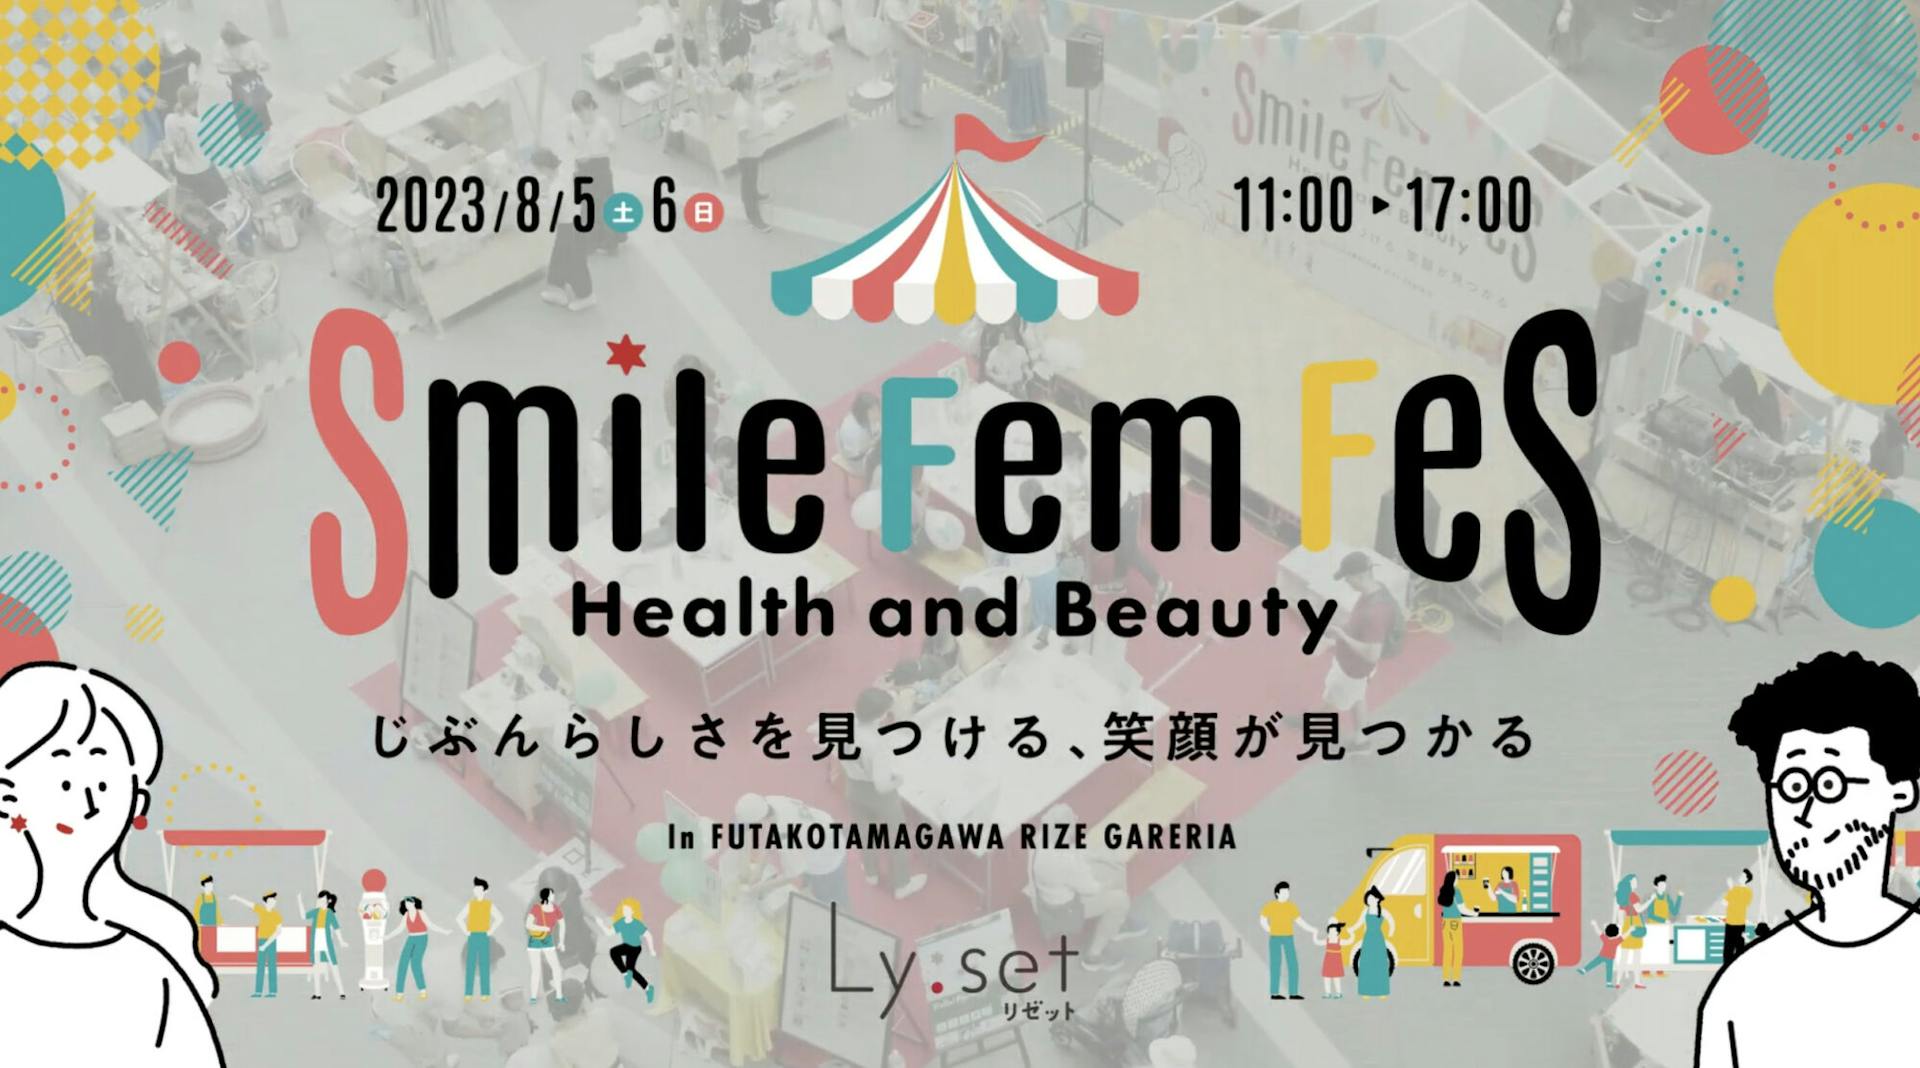 Ly:setイベント（SmileFemFes）の動画を公開しました。 メイン画像